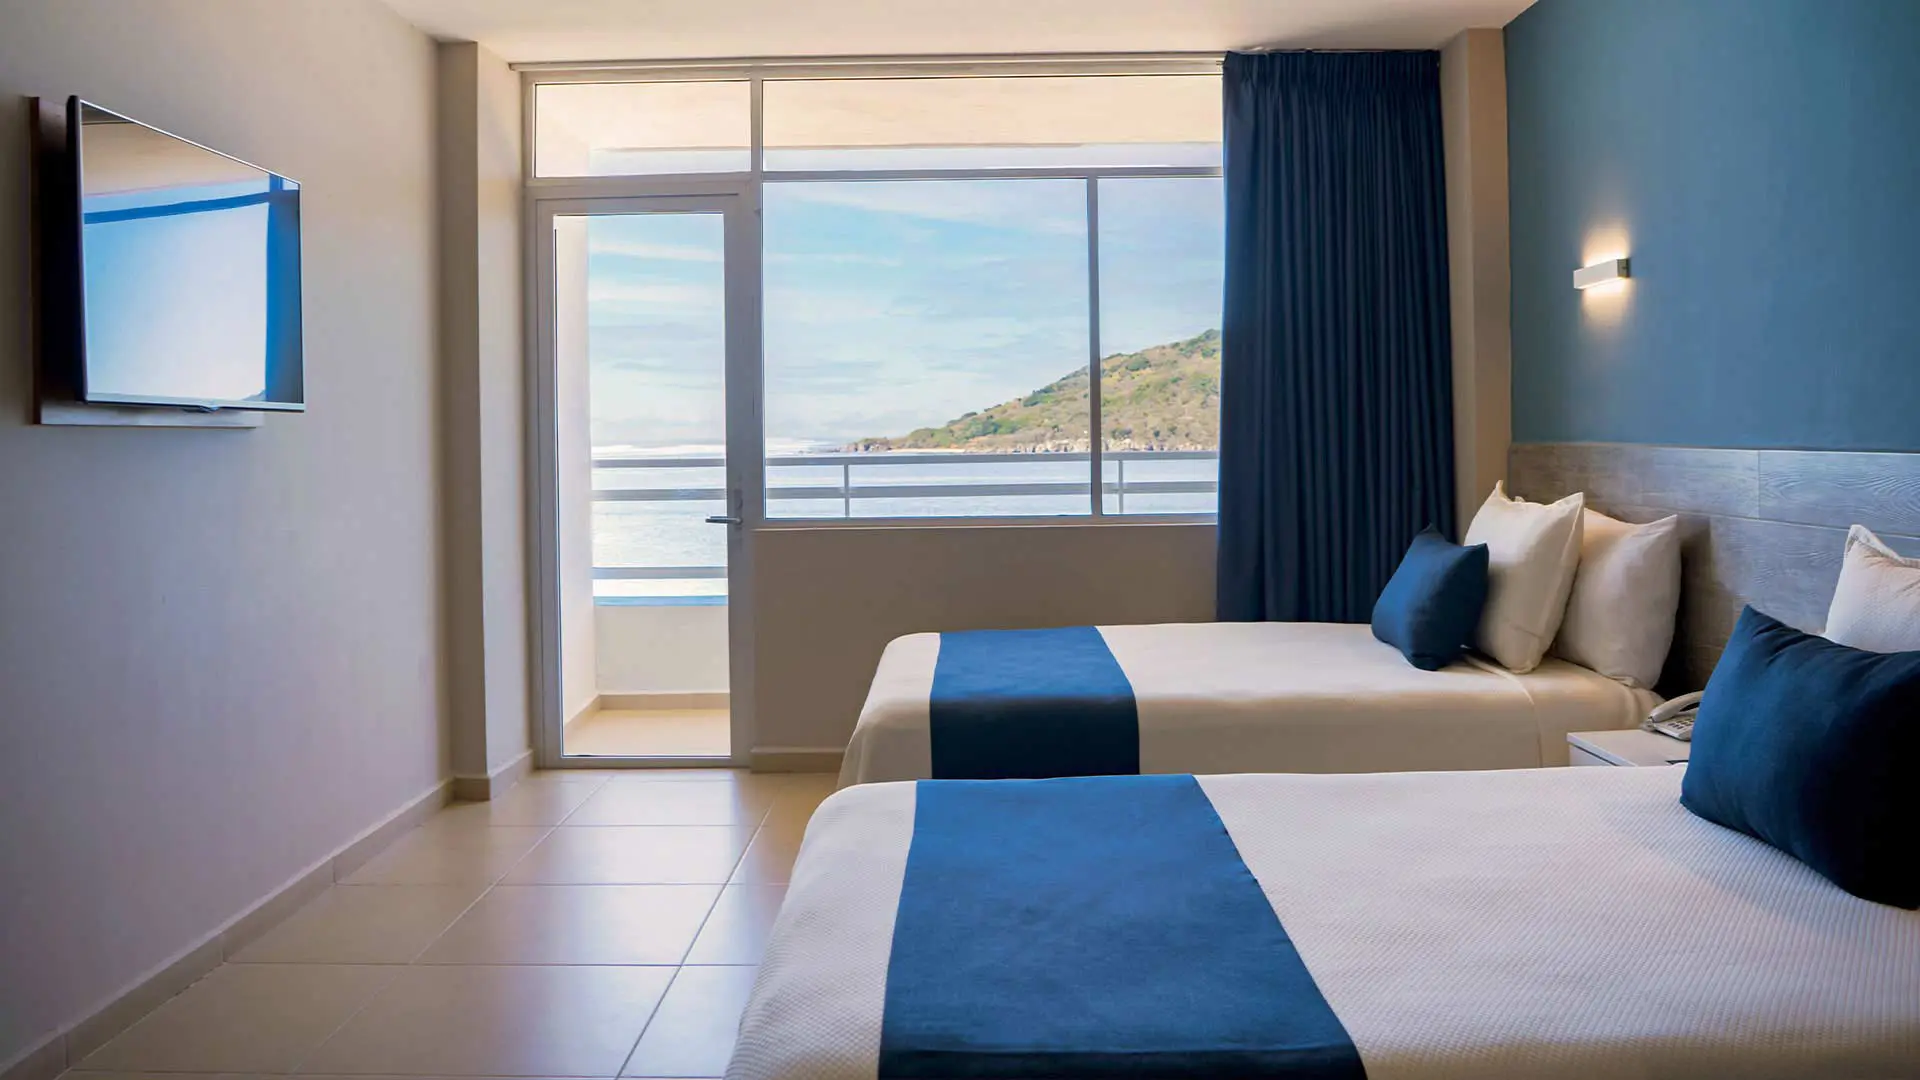 Habitación dos camas matrimoniales con vista al mar hotael Star Palace Mazatlán